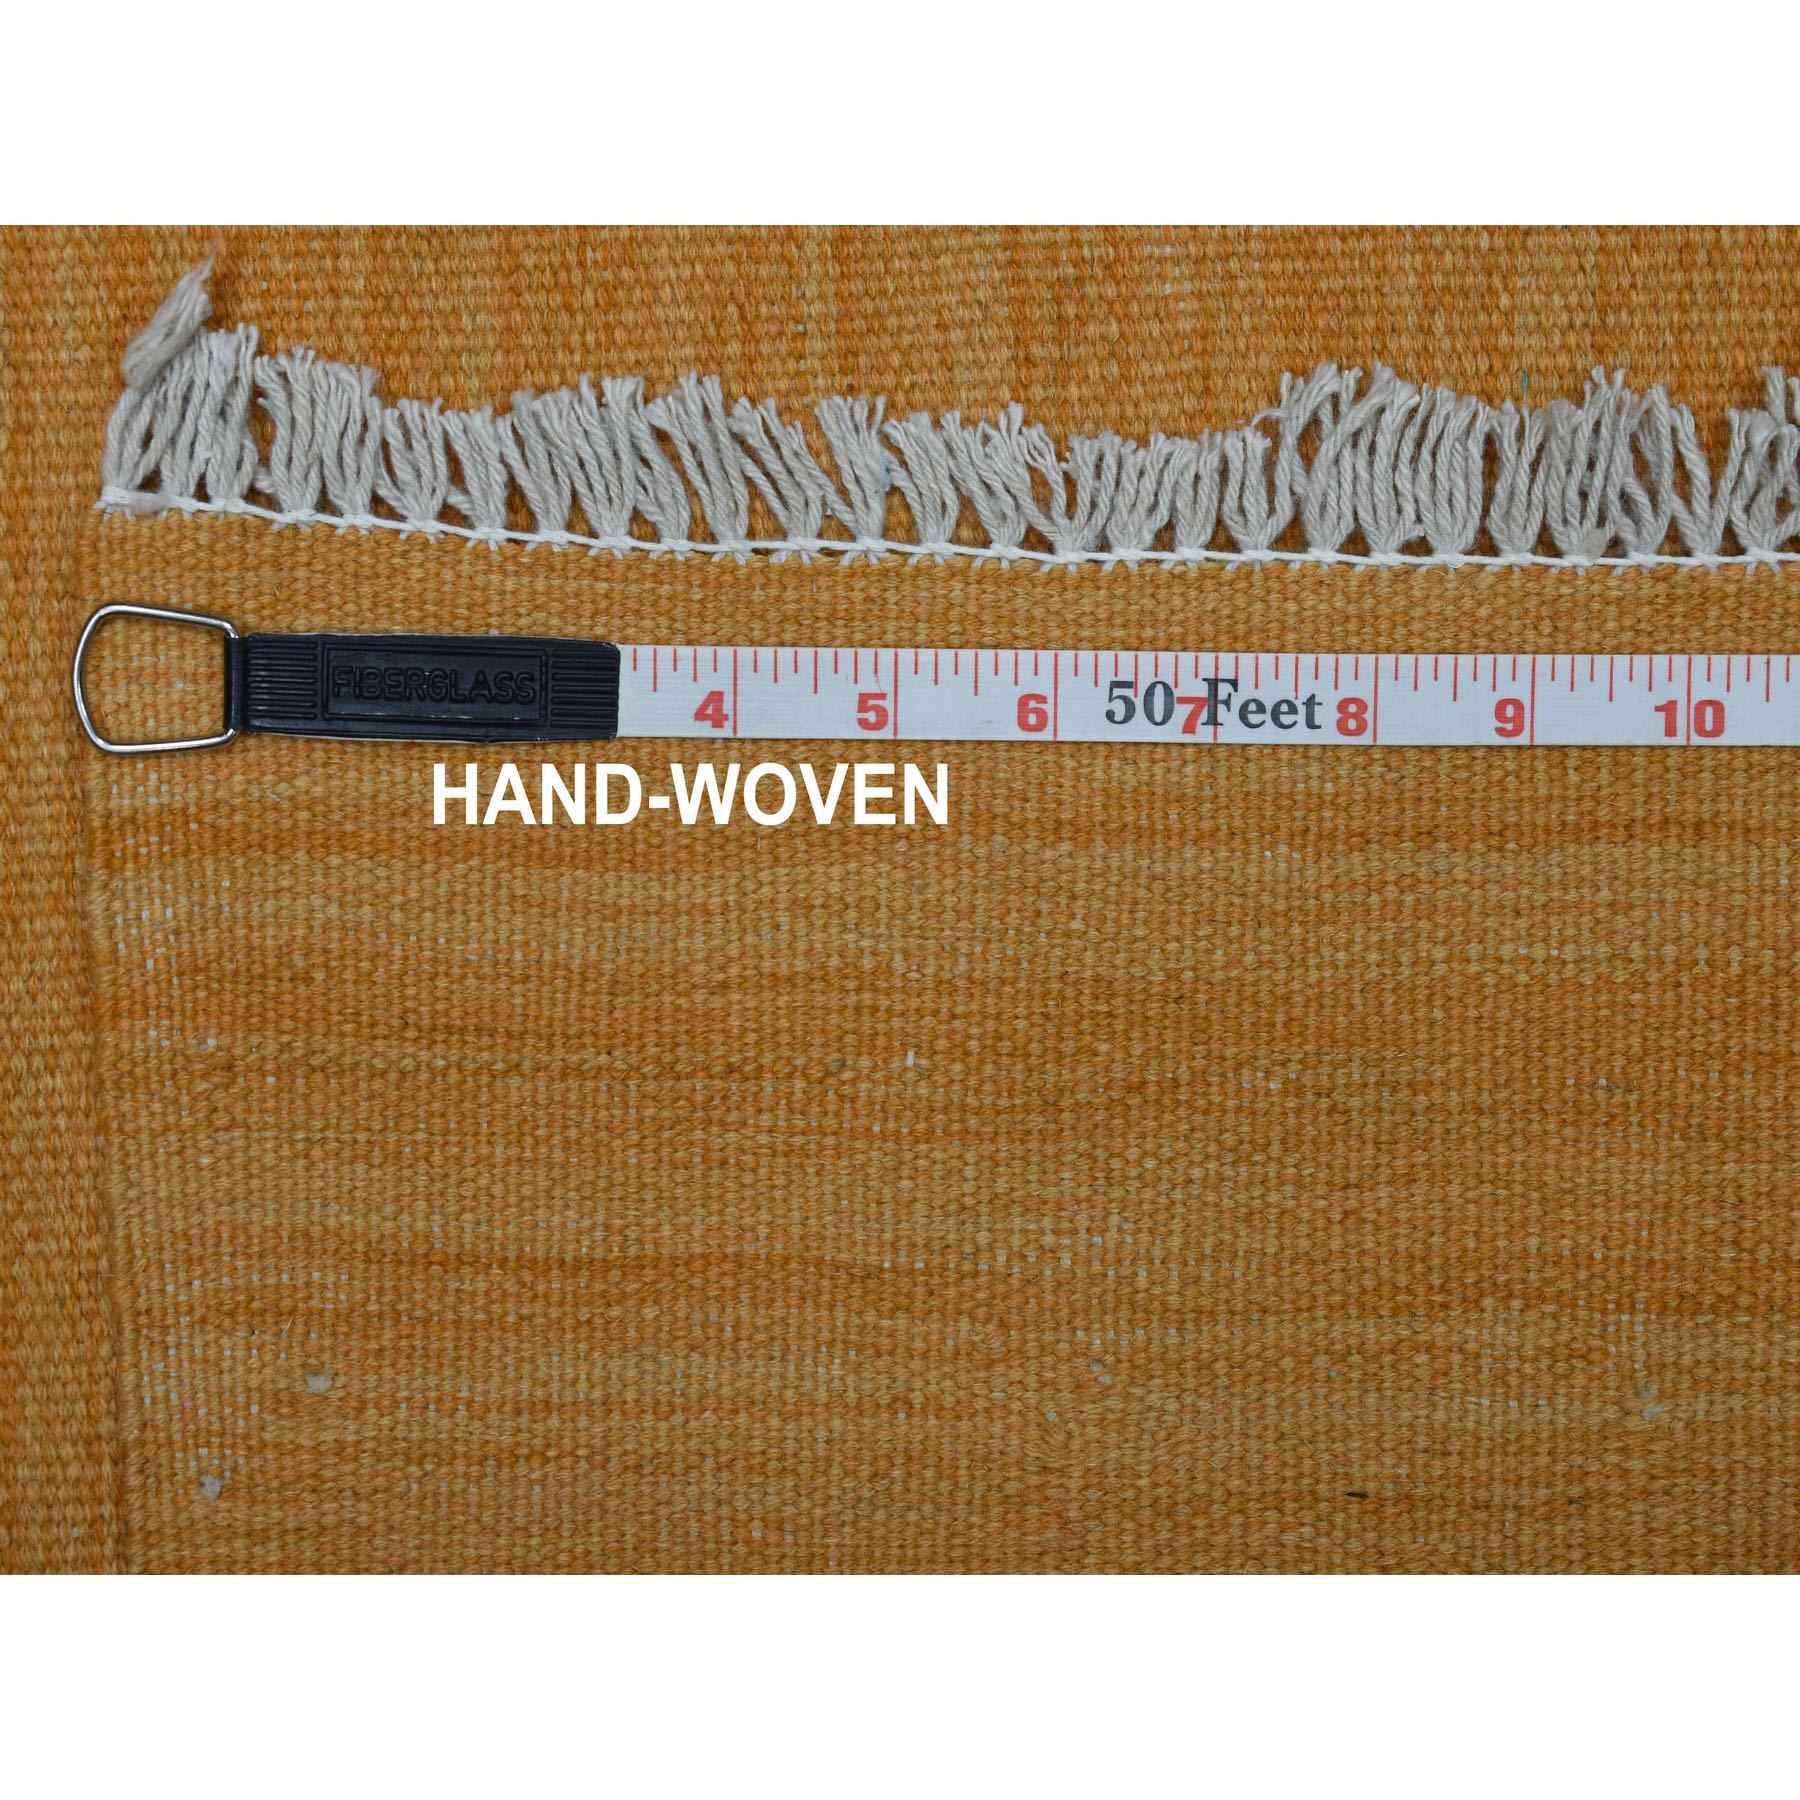 Flat-Weave-Hand-Woven-Rug-269275